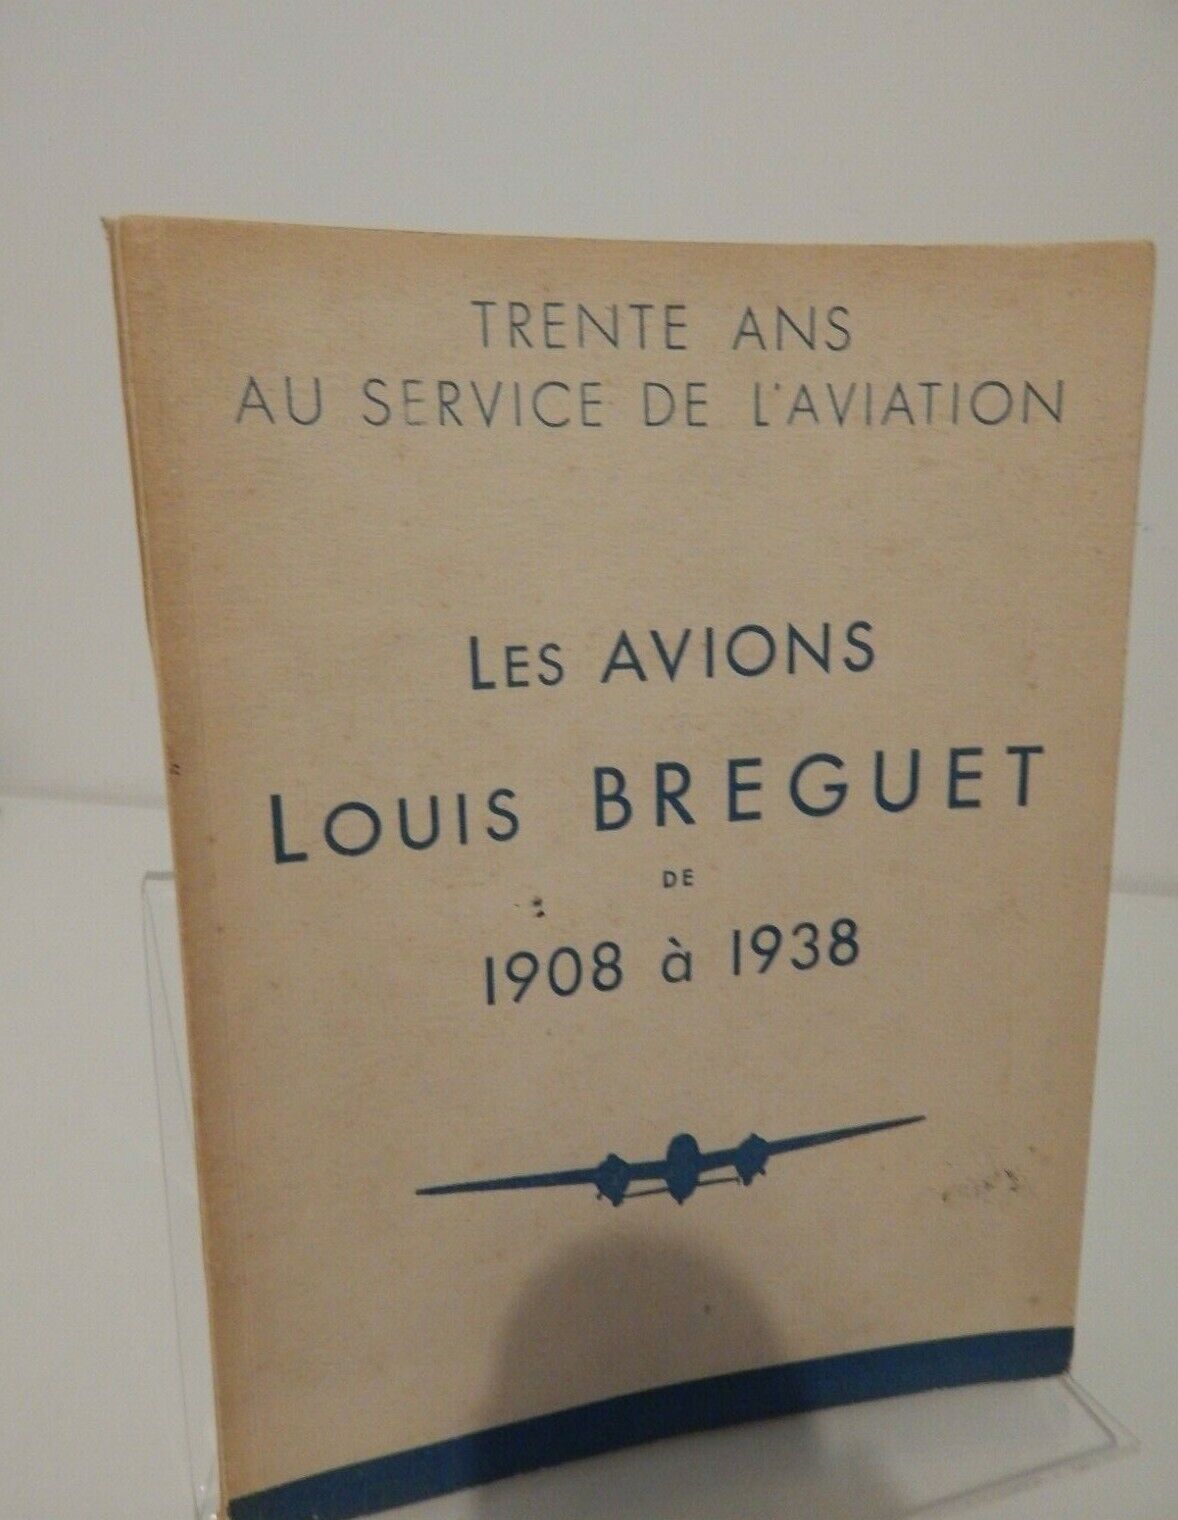 LES AVIONS LOUIS BREGUET PUBLICATION 1908 1938 PERIOD AVIATION rare original 